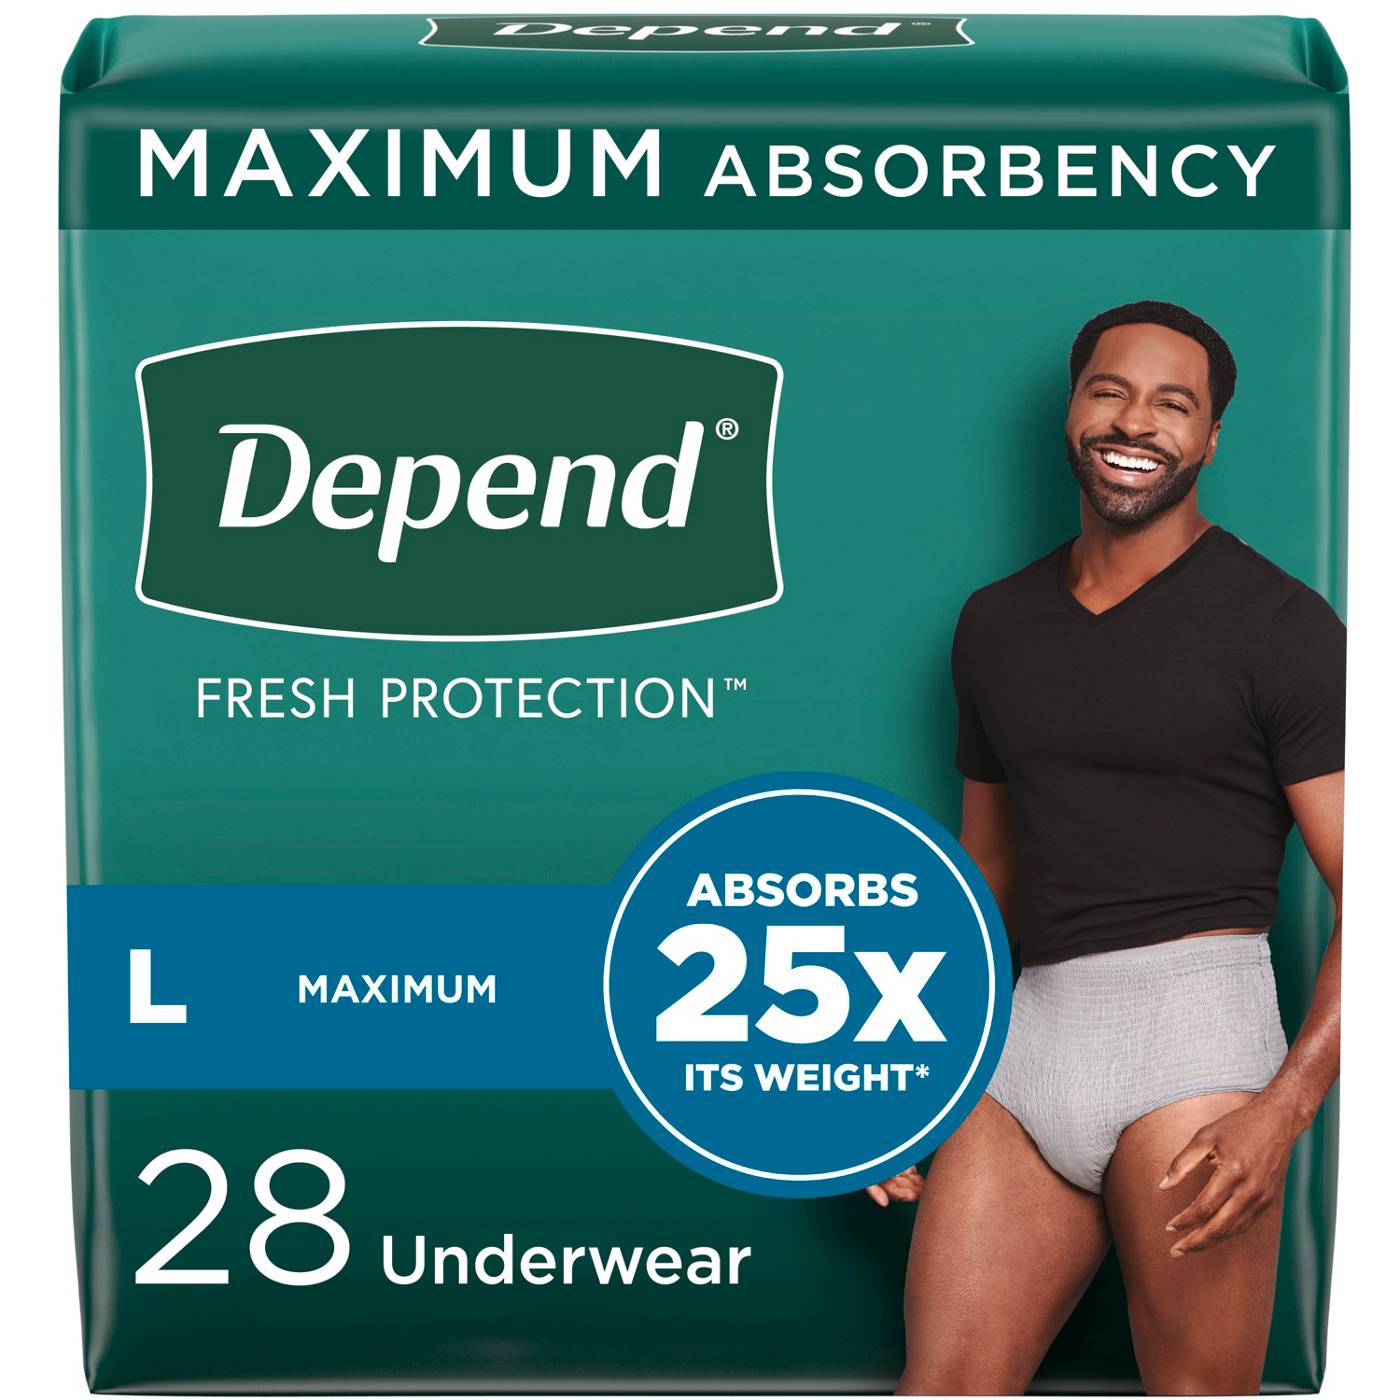 Men's Underwear Shipping, Returns & Assurance